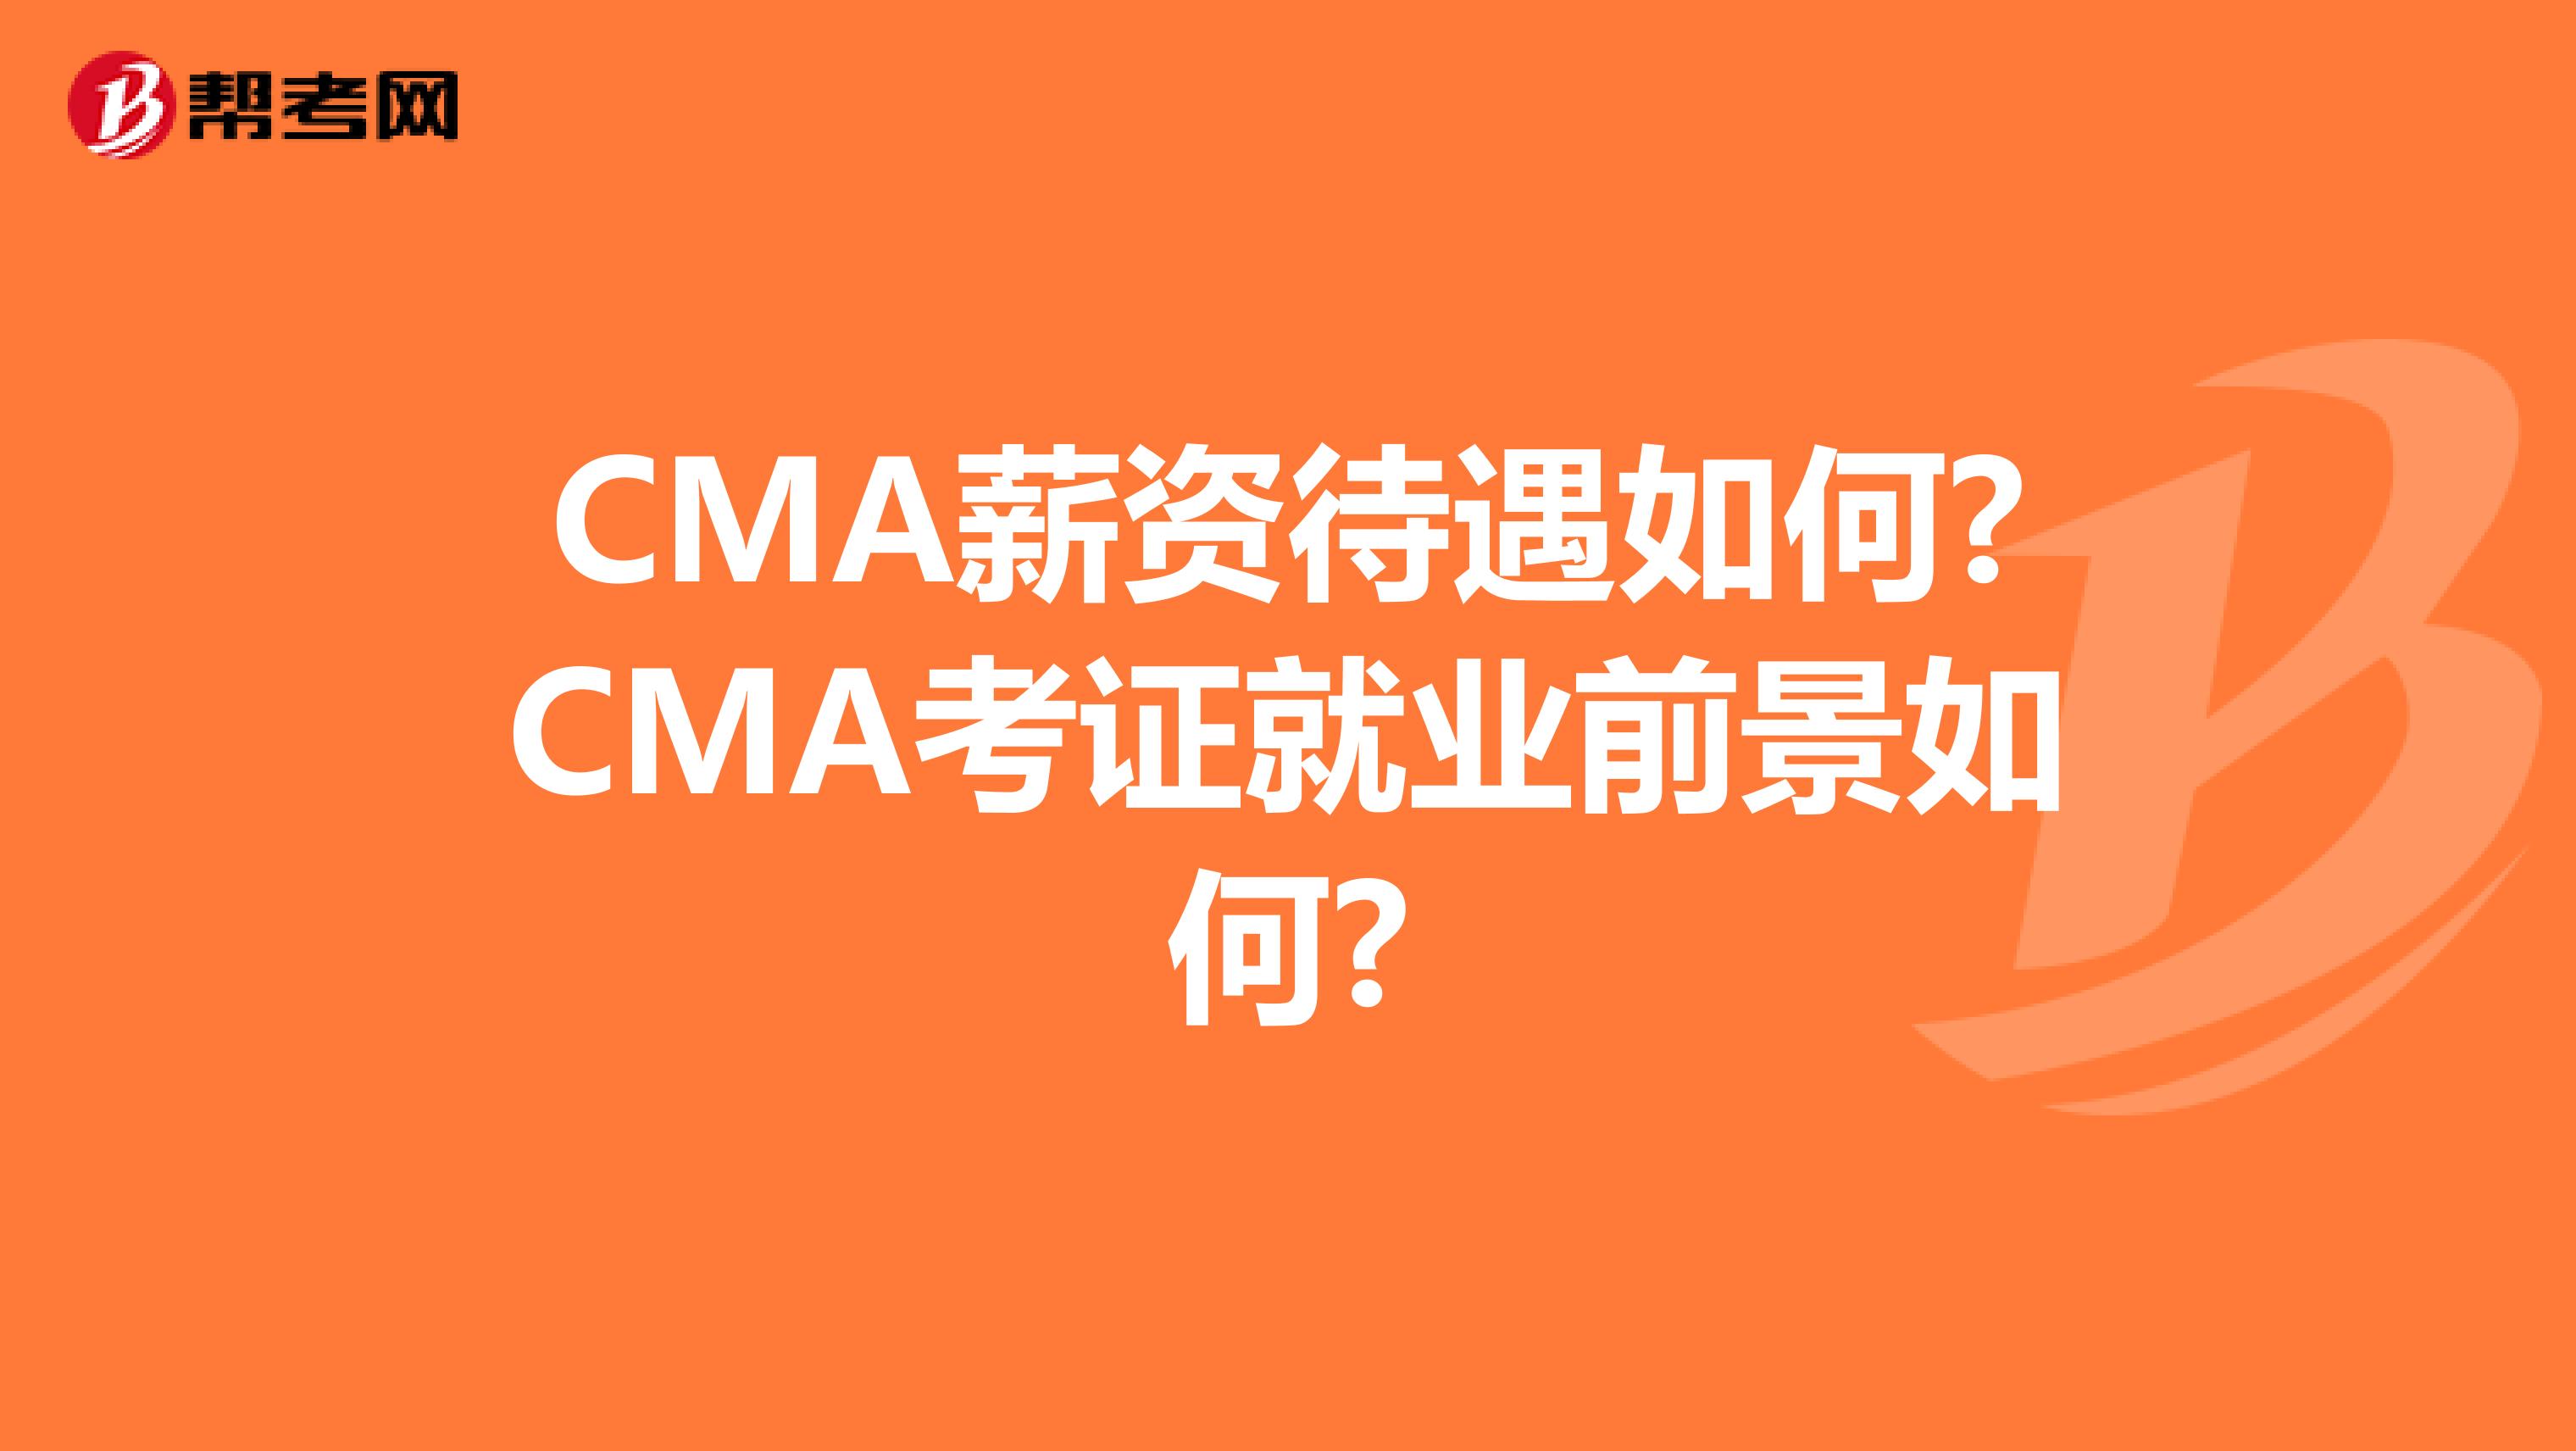 CMA薪资待遇如何?CMA考证就业前景如何?